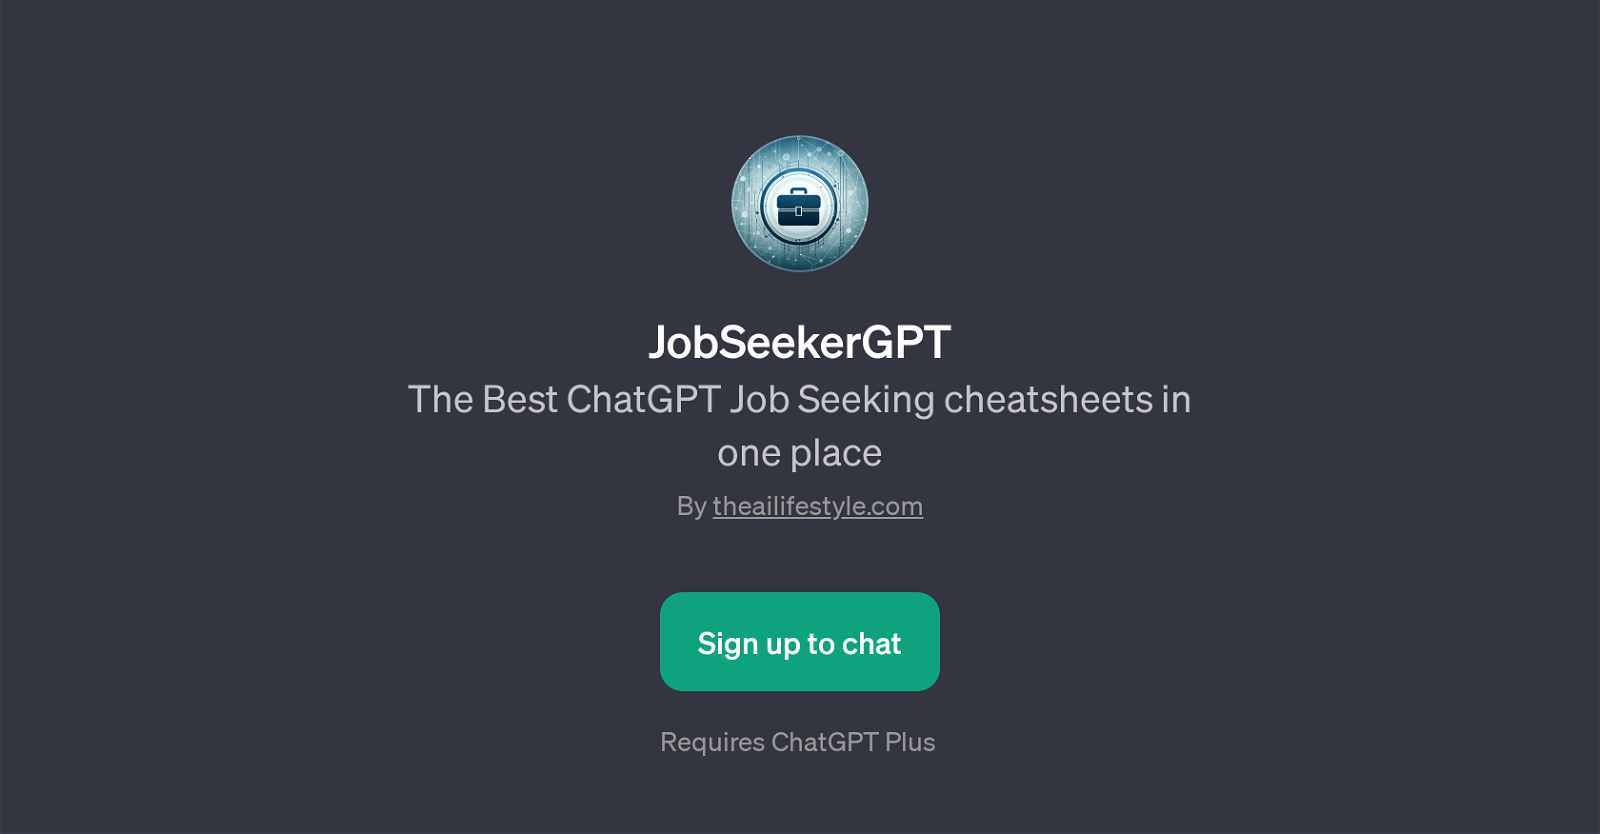 JobSeekerGPT website